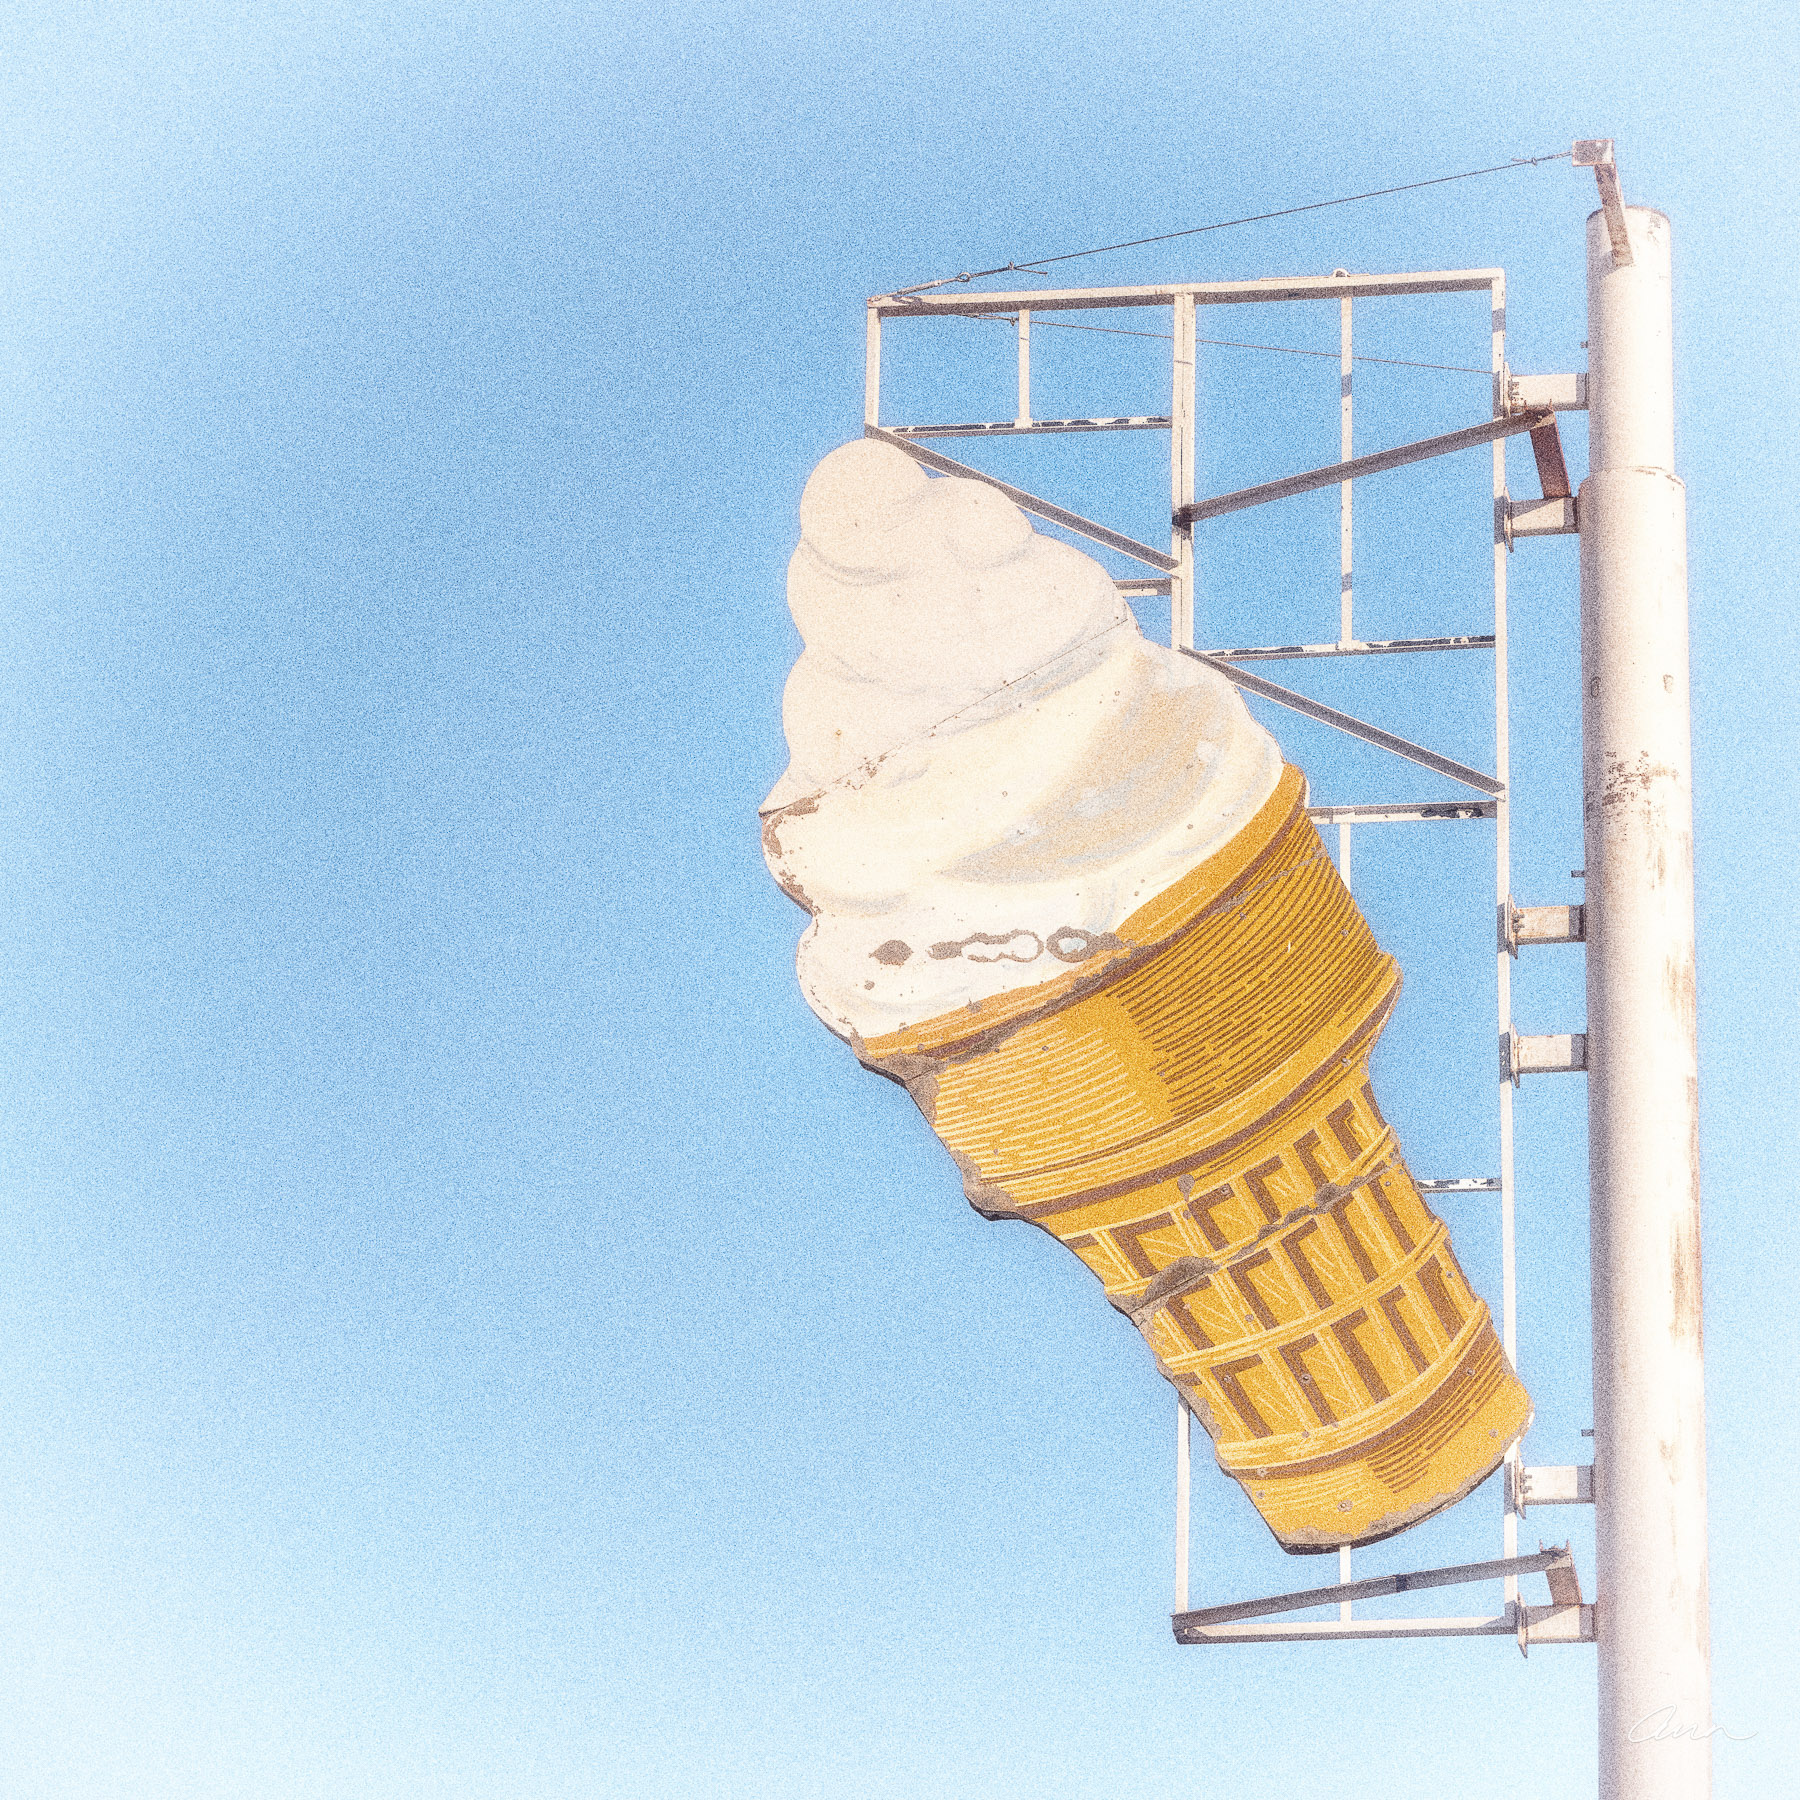 Vintage road sign of swirl ice cream cone